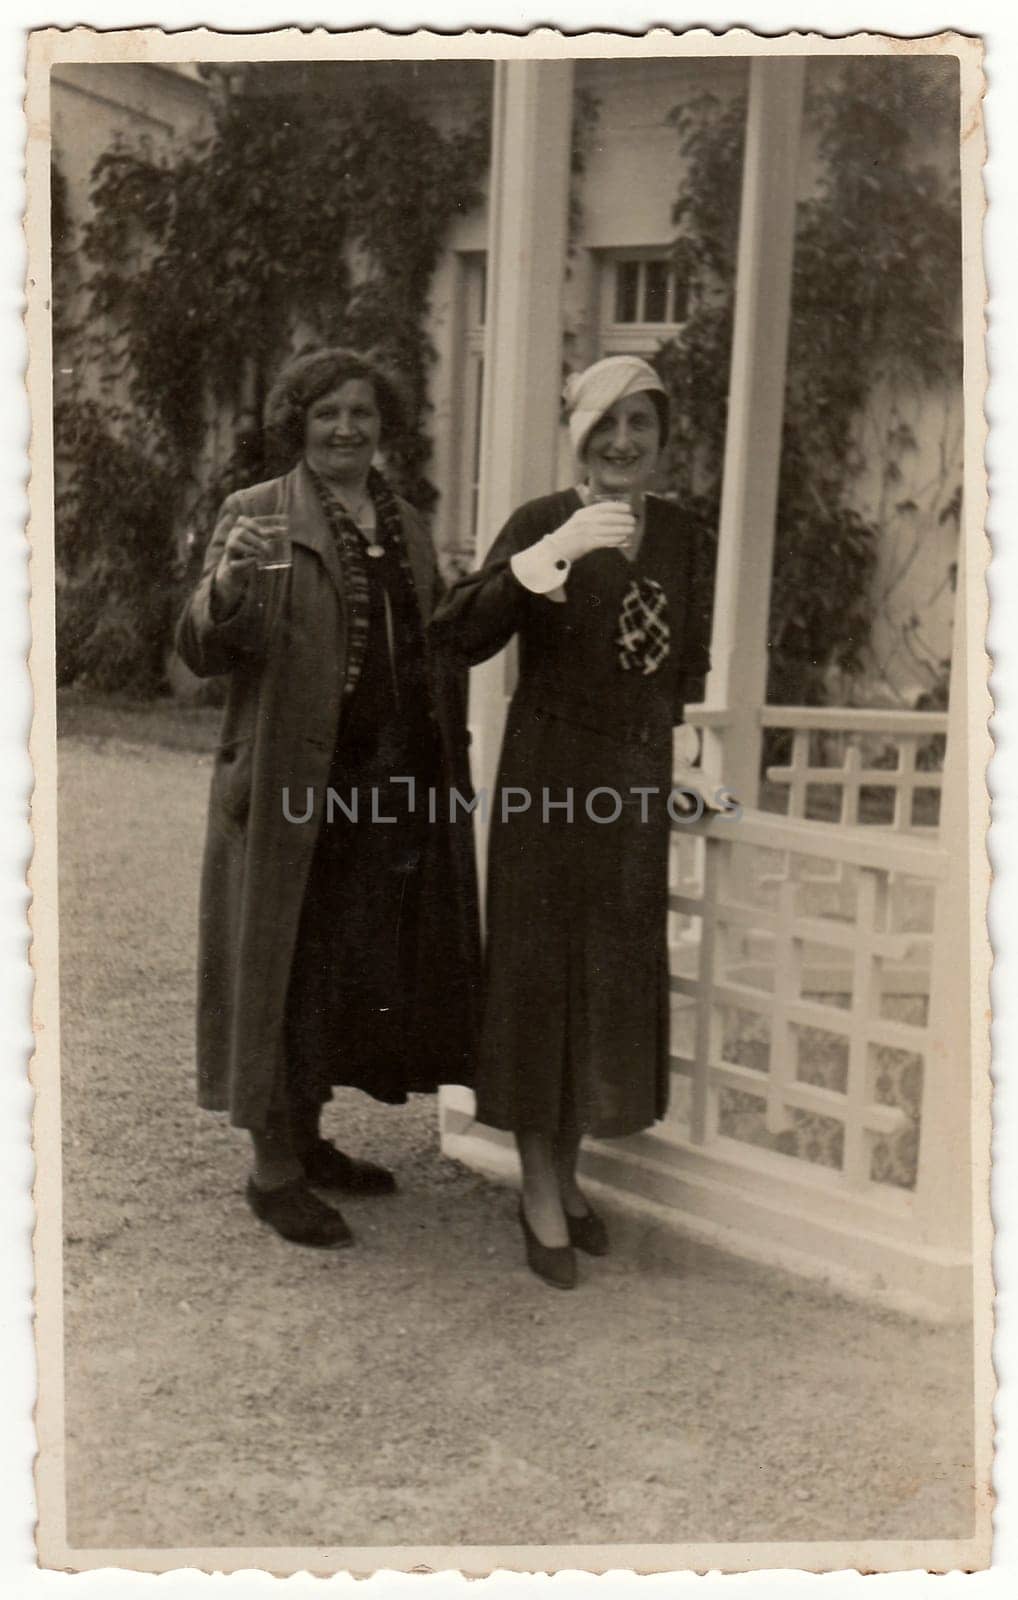 TRENCIANSKE TEPLICE, THE CZECHOSLOVAK REPUBLIC - CIRCA 1930s: Vintage photo shows elegant women at the spa resort. Black & white antique photography.